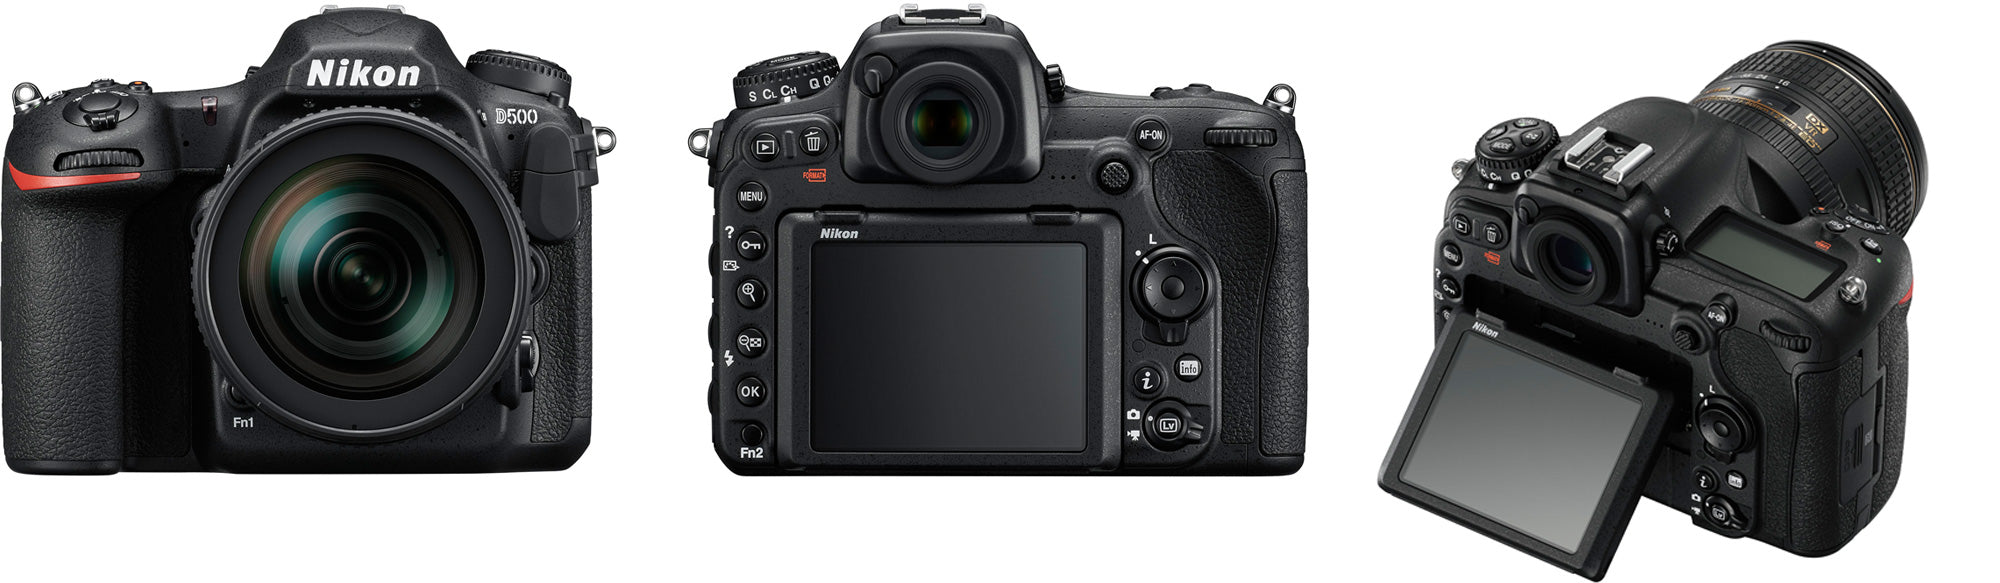 Nikon D500 DX-Format Digital SLR (Body Only), Base